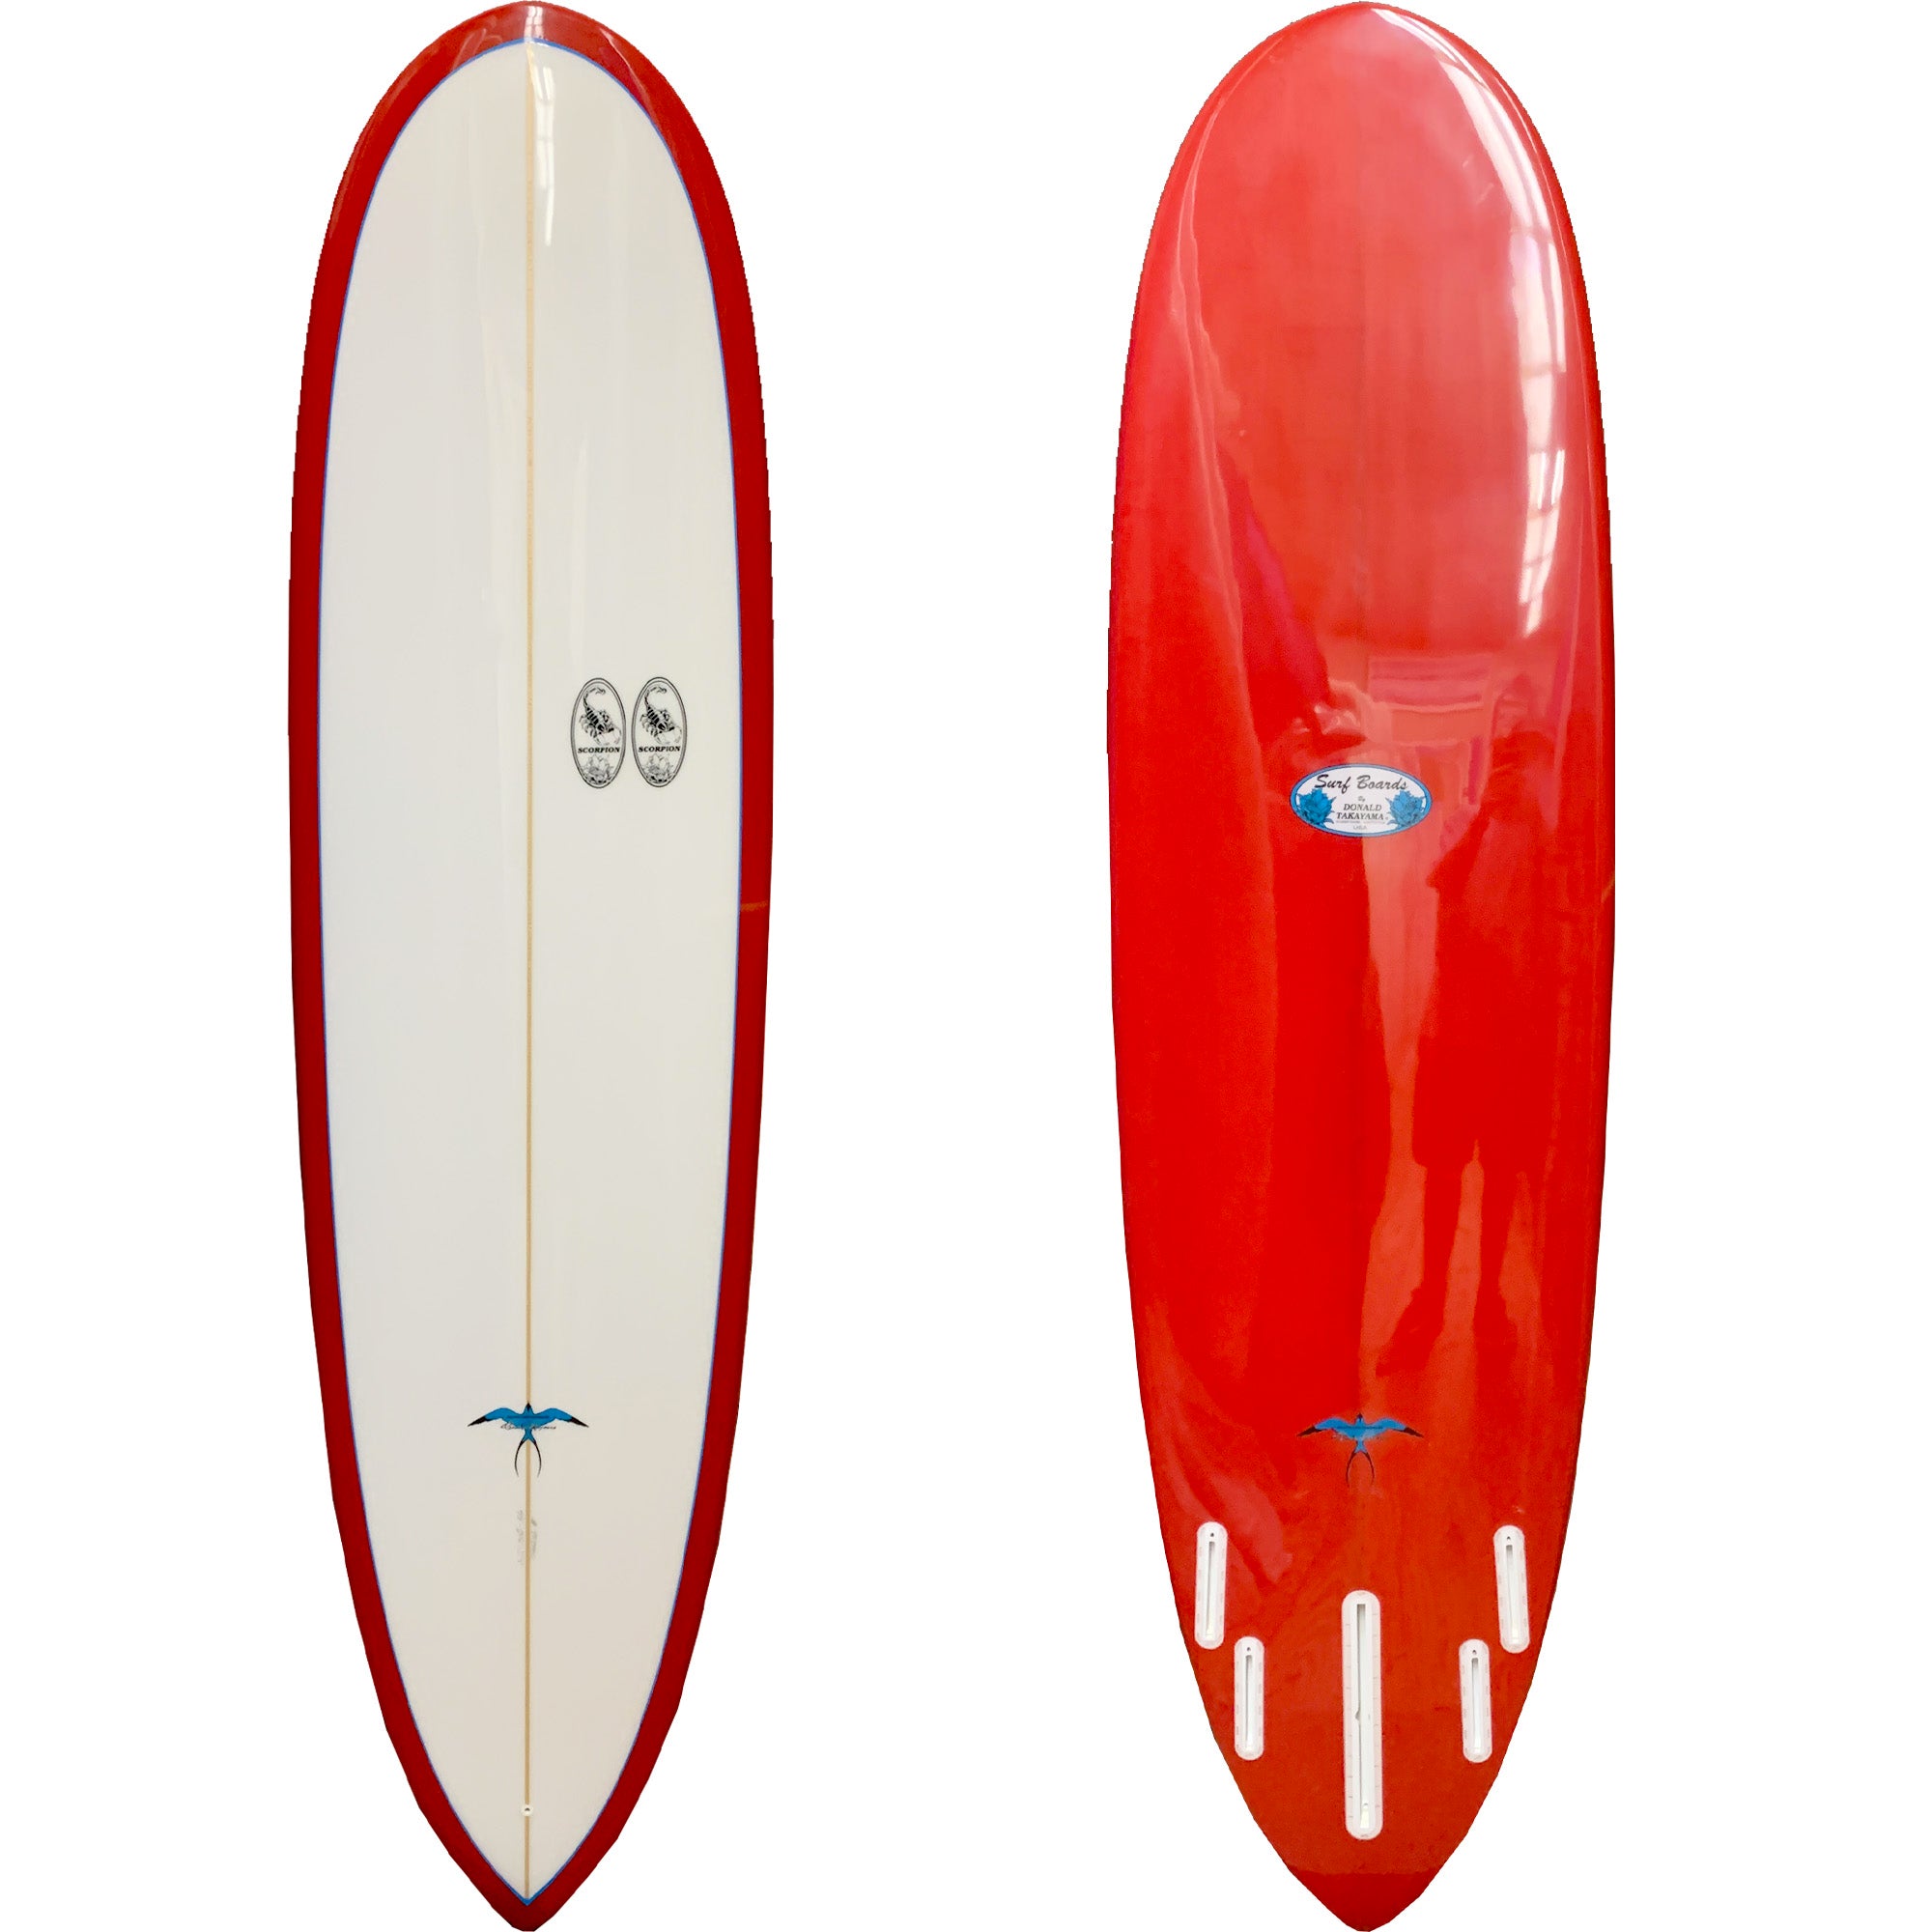 Takayama Scorpion NR4 Surfboard